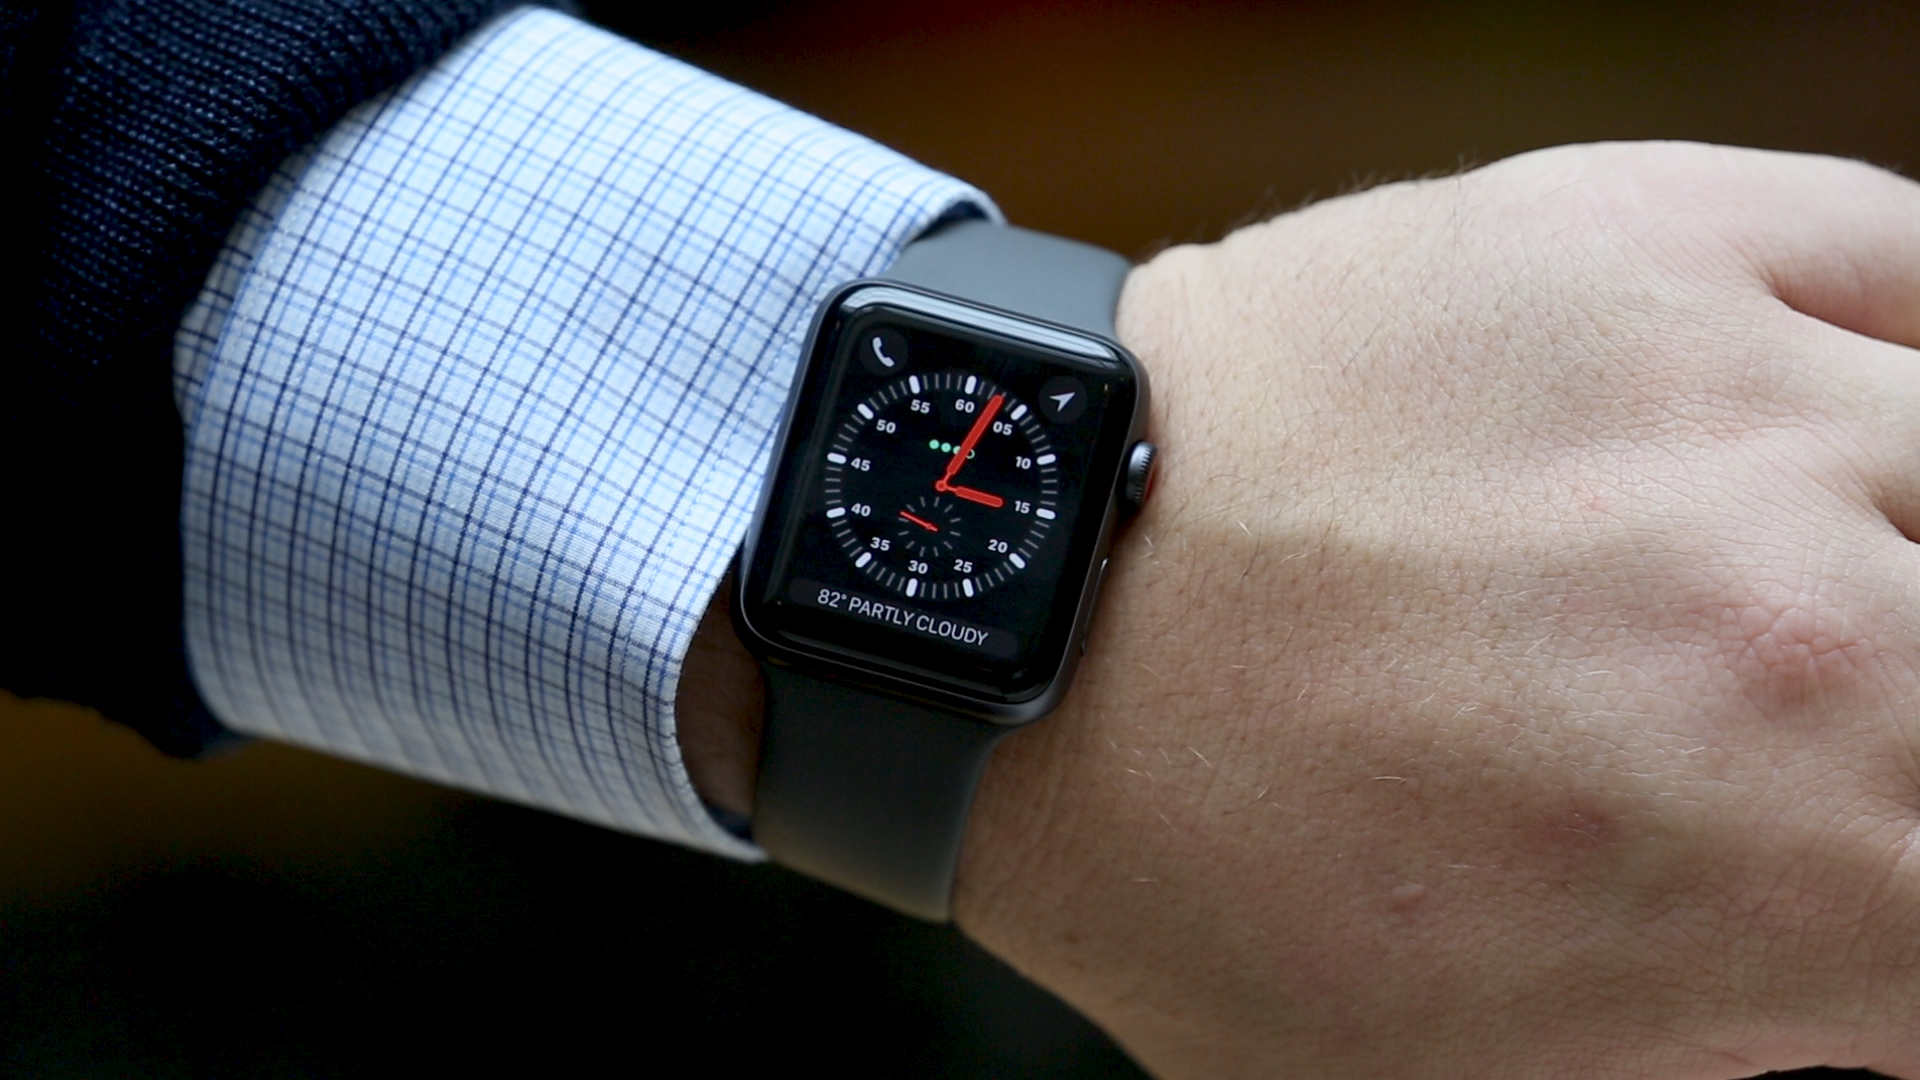 World 3 watch. Часы с трансфлективным дисплеем. Смарт часы с костюмом. Apple watch 3 Esim. Apple watch на руке.